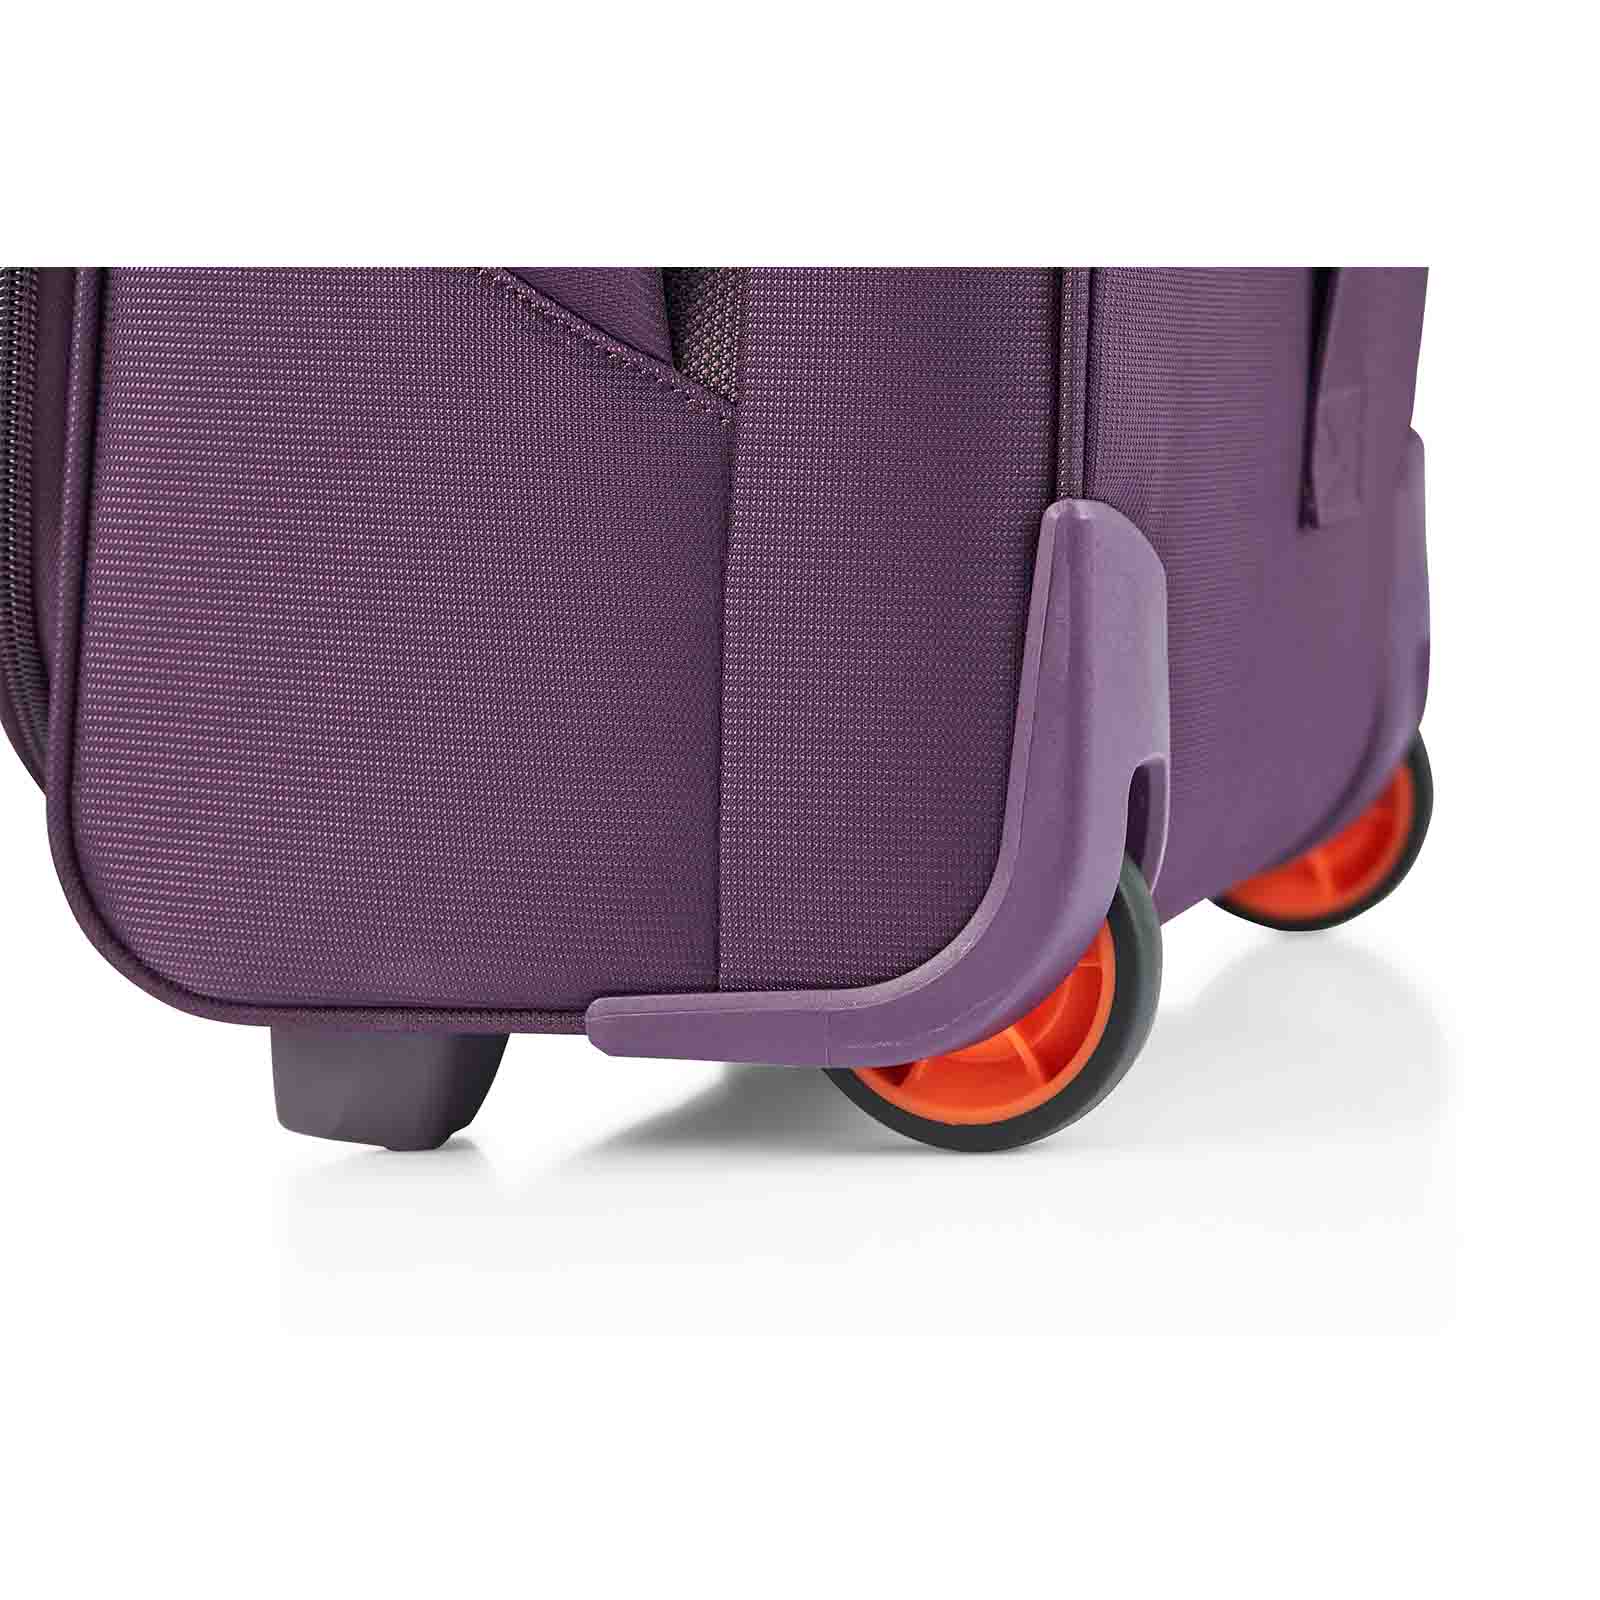 American-Tourister-Applite-4-Eco-50cm-Carry-On-Suitcase-Purple-Orange-Wheels